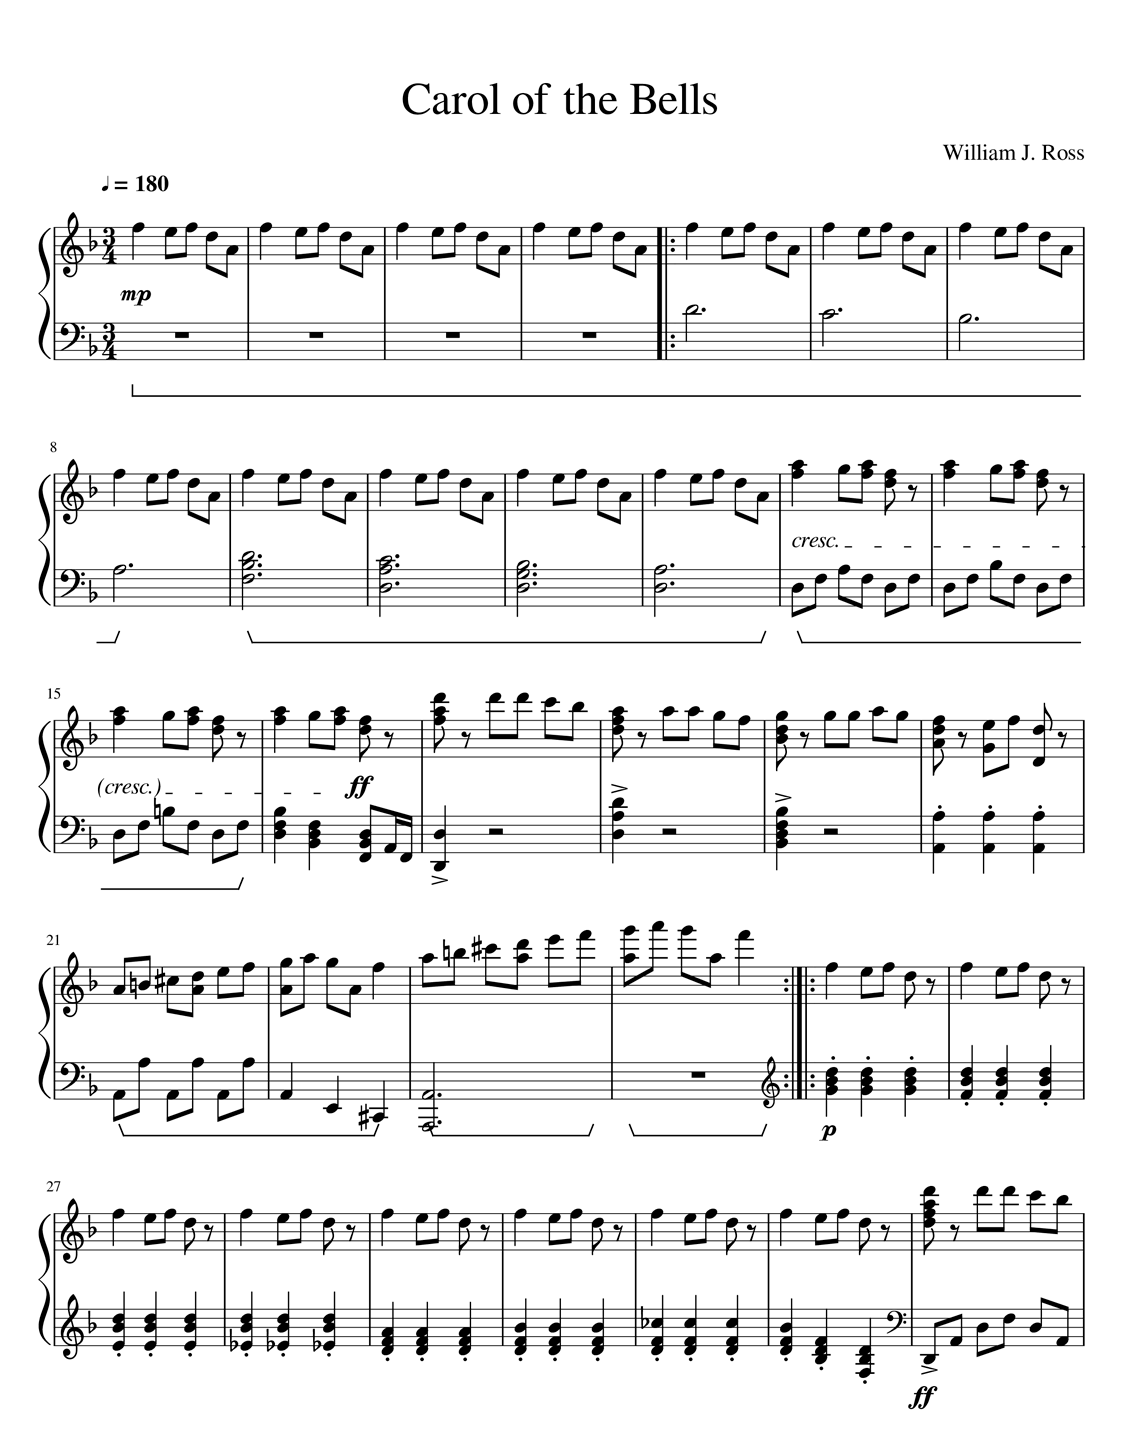 carol-of-the-bells-sheet-piano